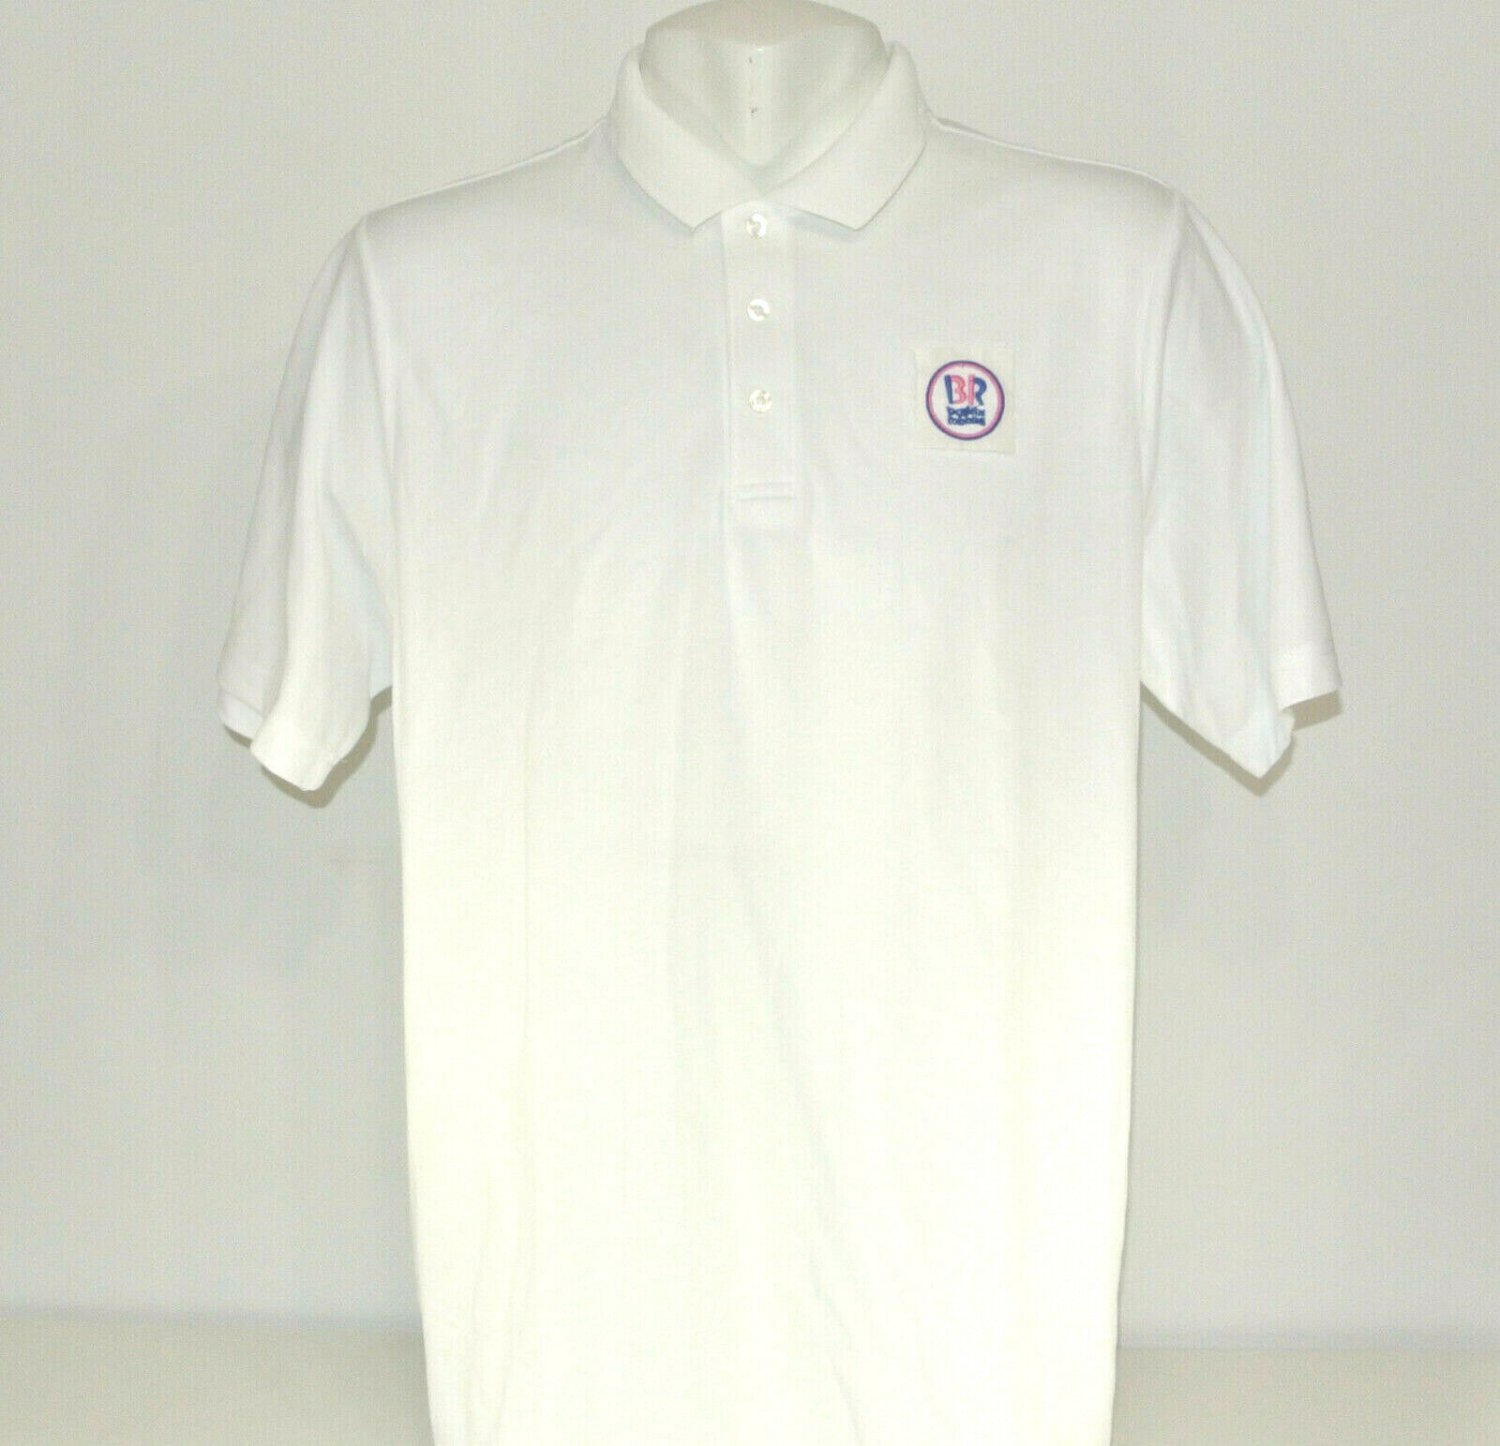 BASKIN ROBBINS ICE CREAM Employee Uniform Polo Shirt White Size M 46 NEW MT